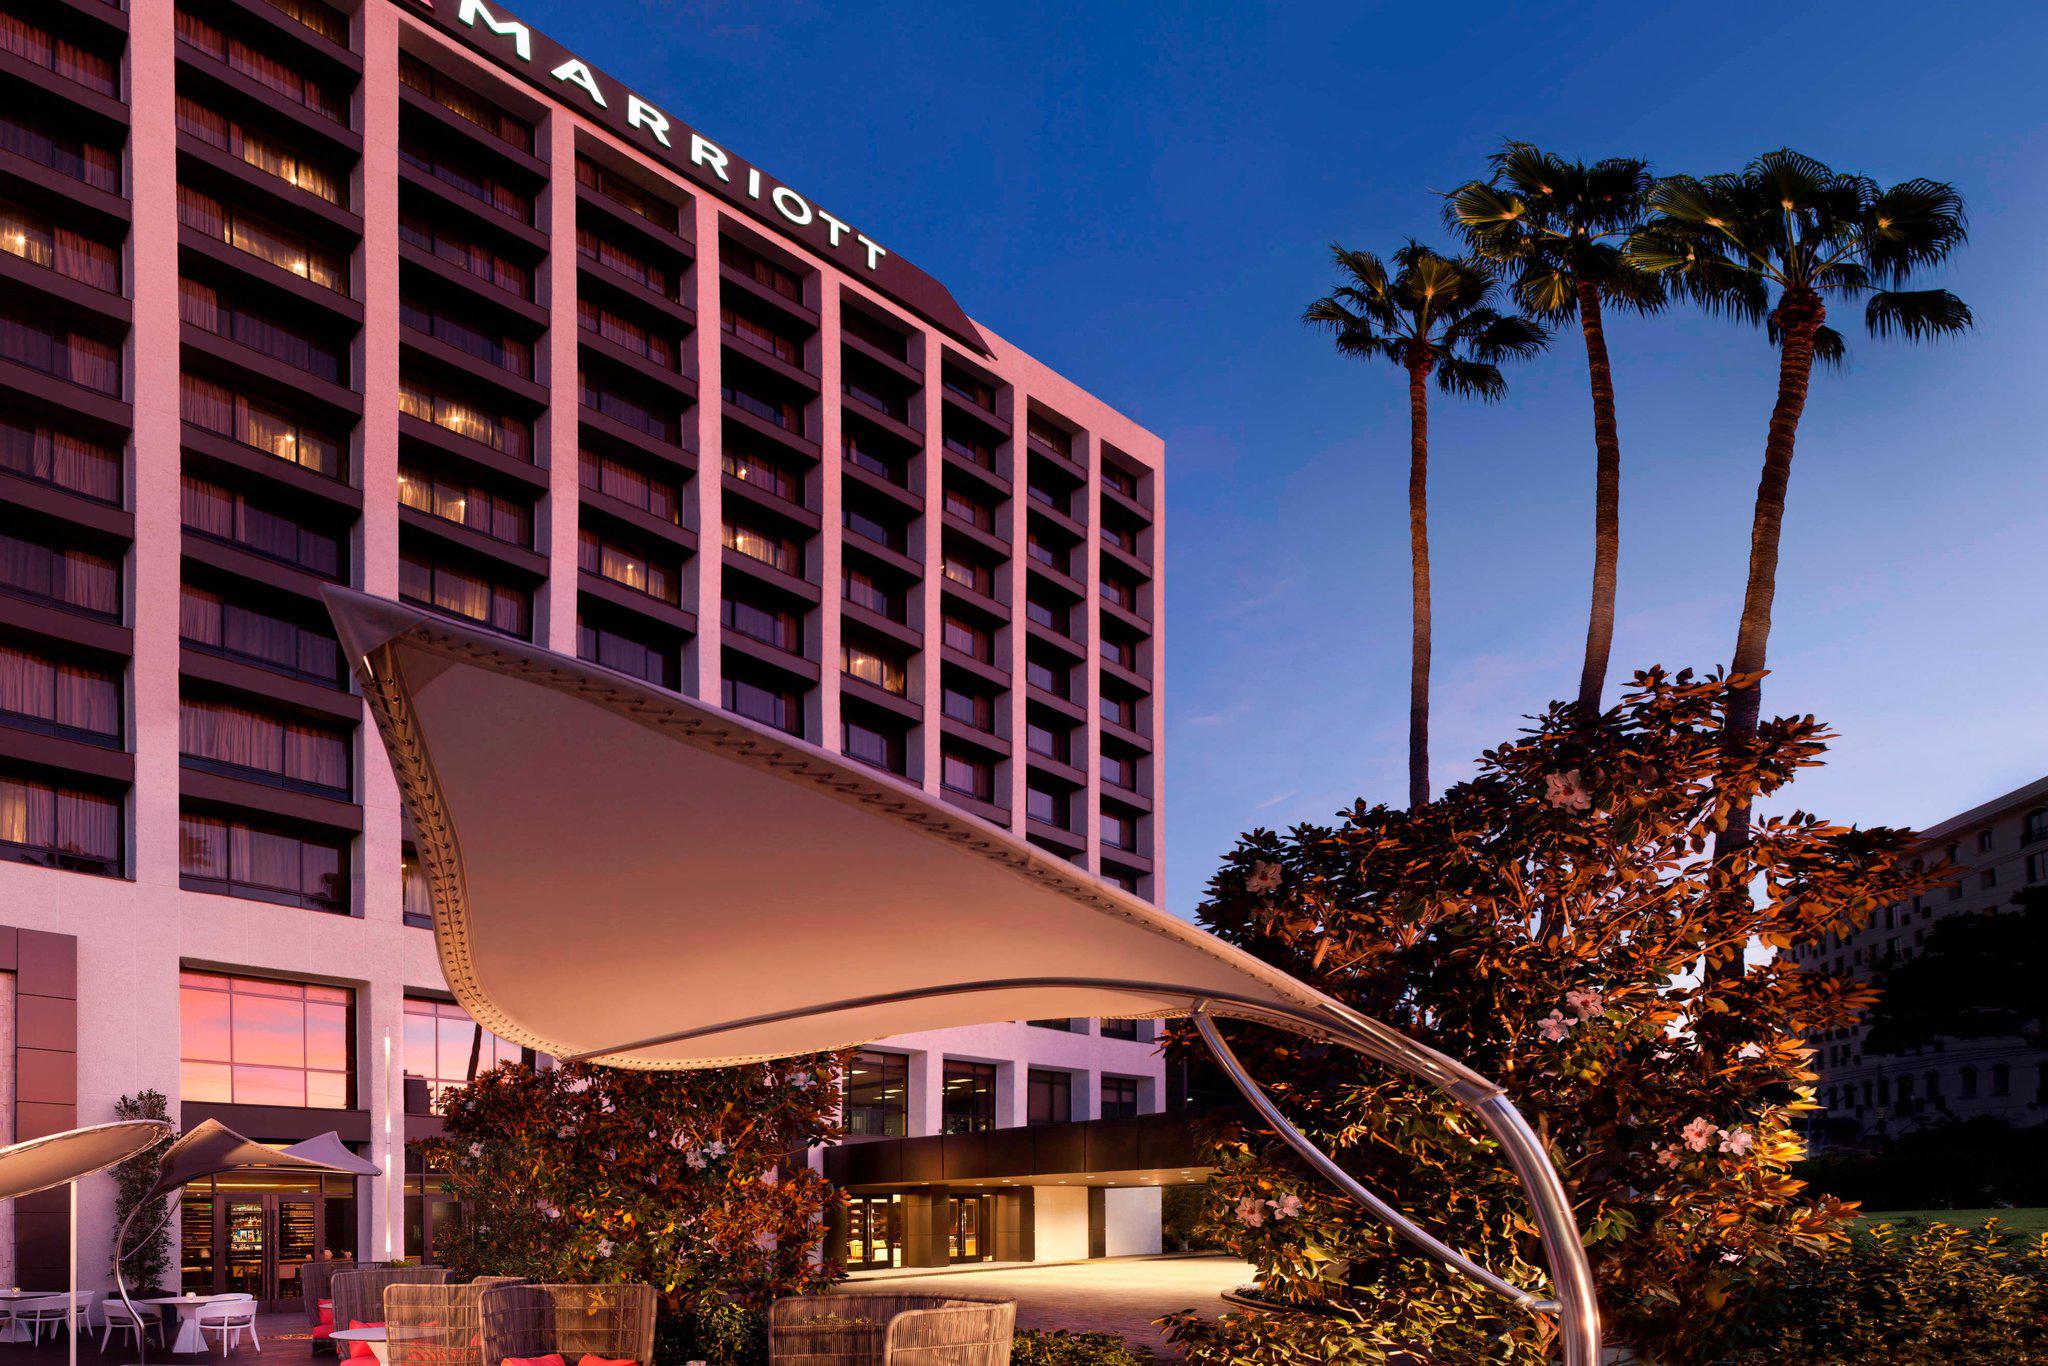 Beverly Hills Marriott Photo